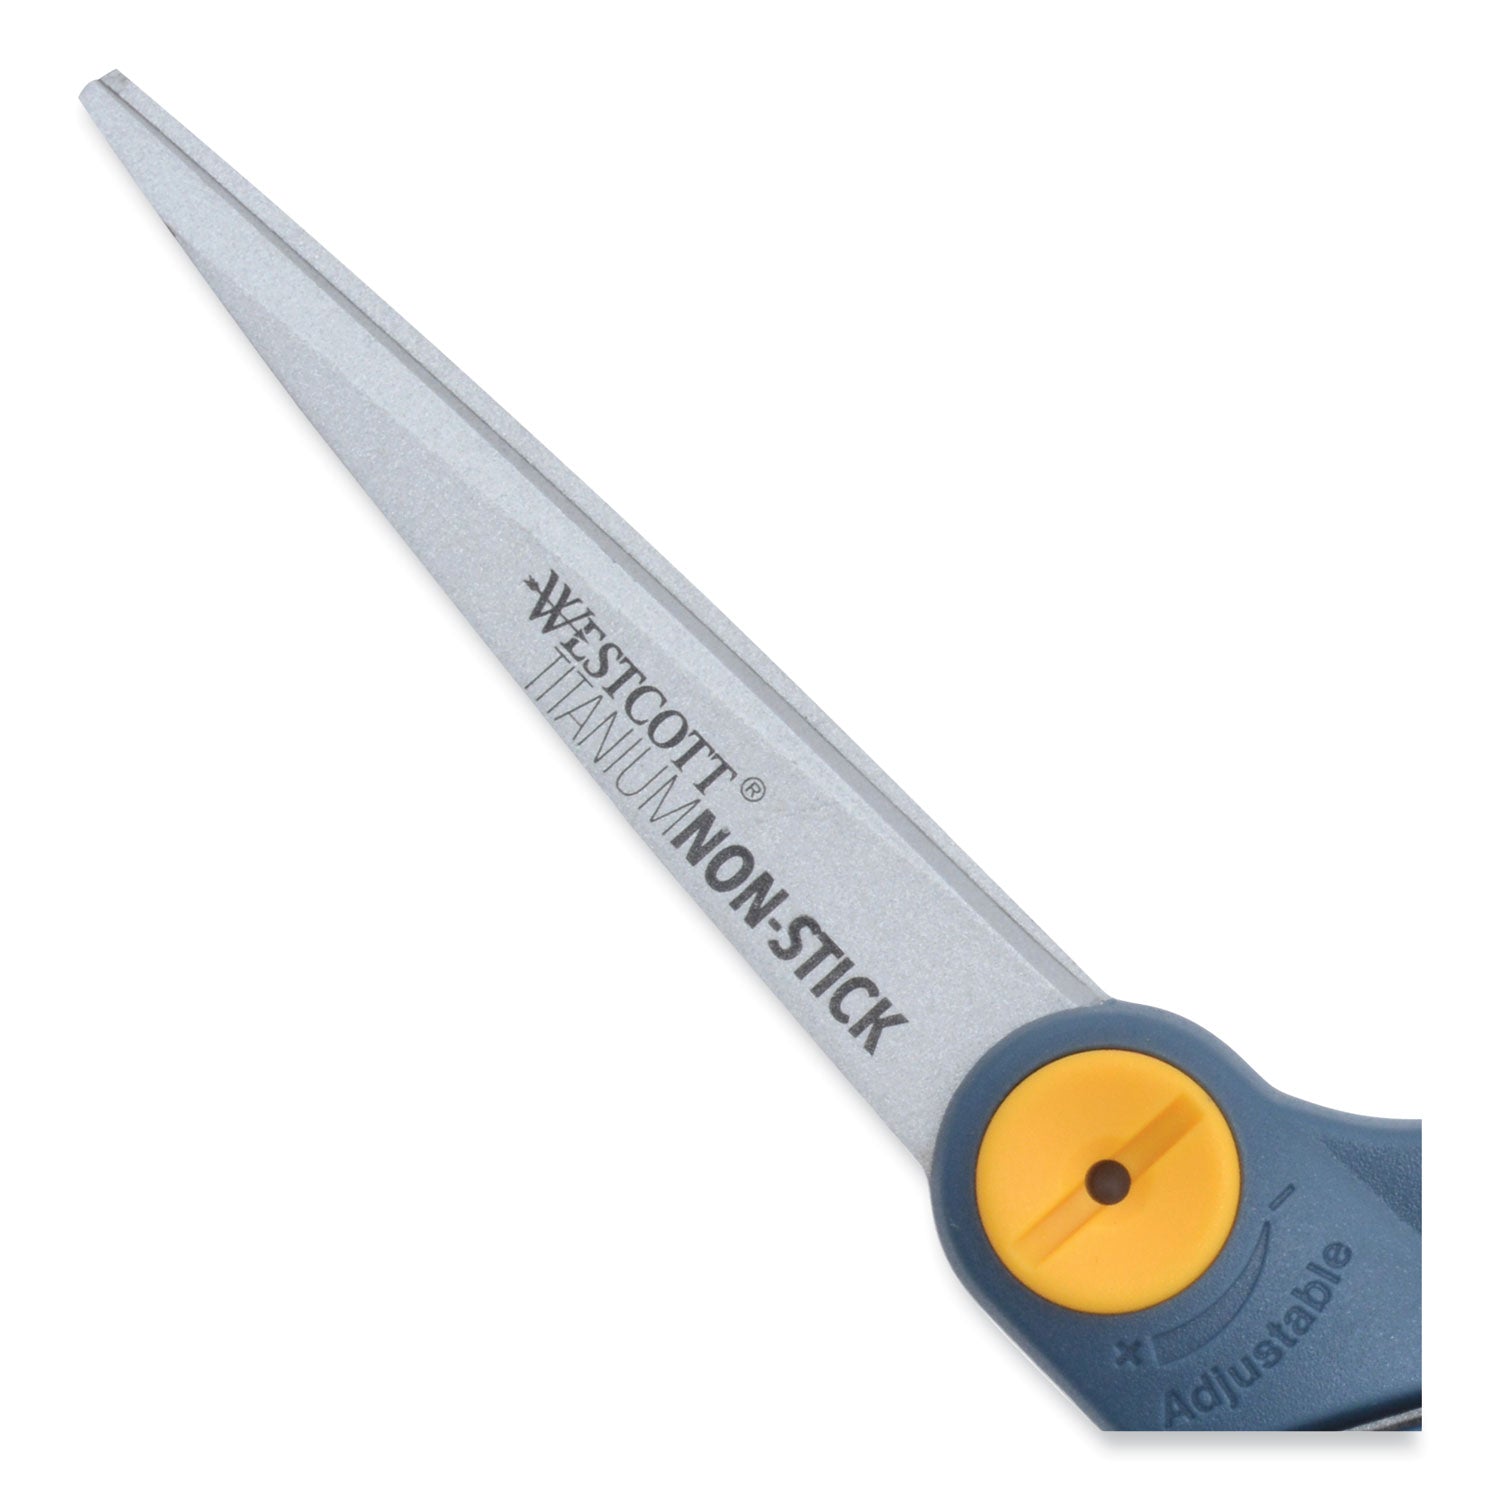 Non-Stick Titanium Bonded Scissors, 8" Long, 3.25" Cut Length, Gray/Yellow Bent Handle - 